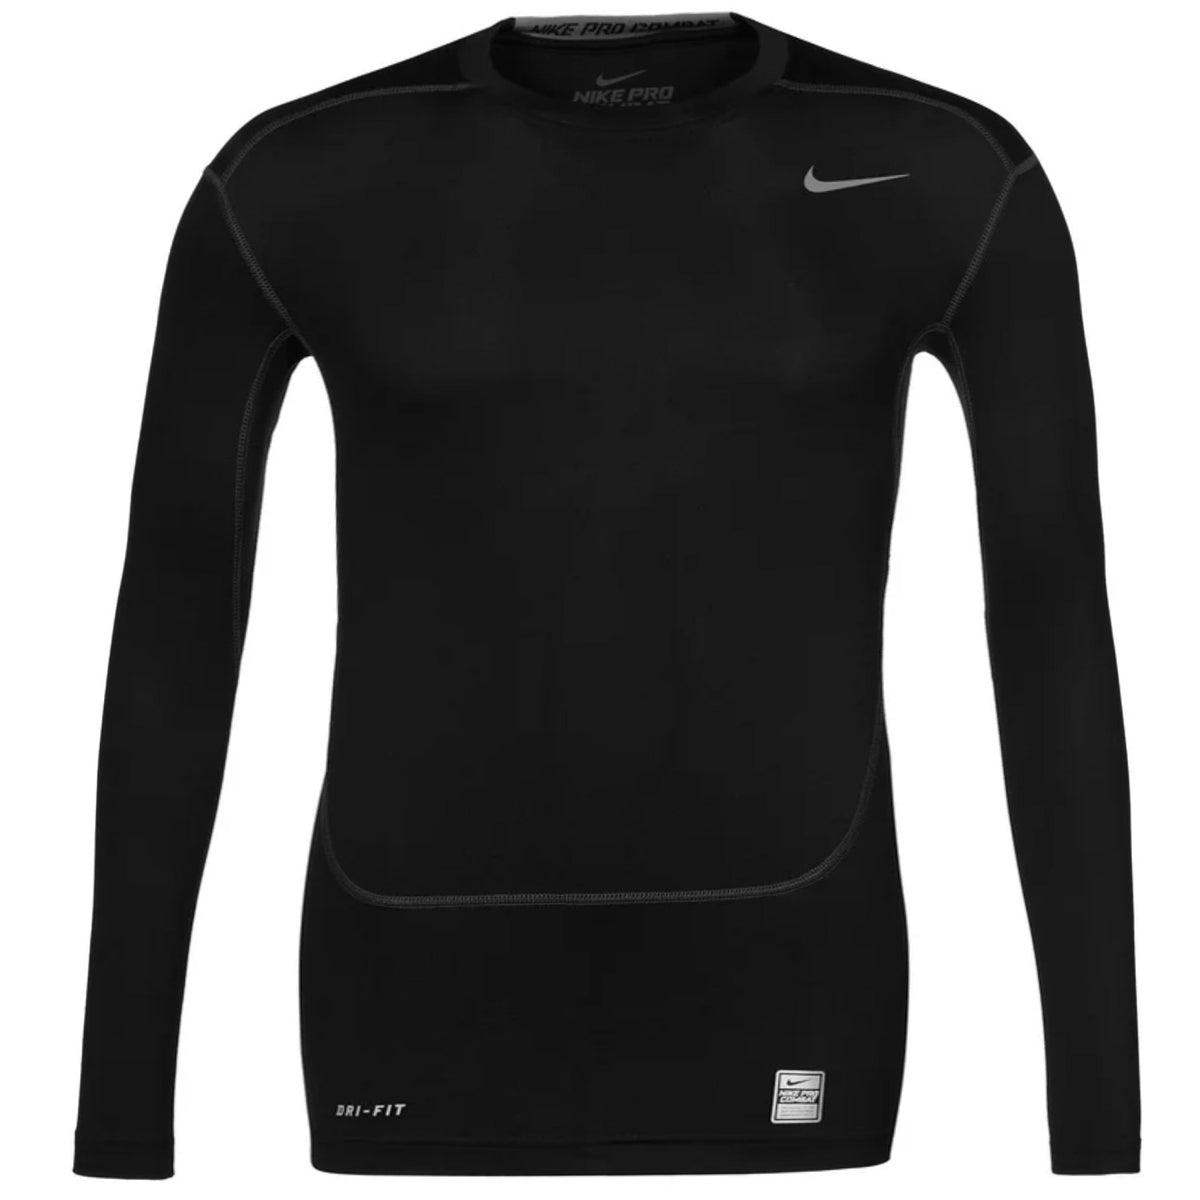 Actriz compañero visto ropa Camiseta interior mangas largas Nike Pro Combat - Negro | All4cycling